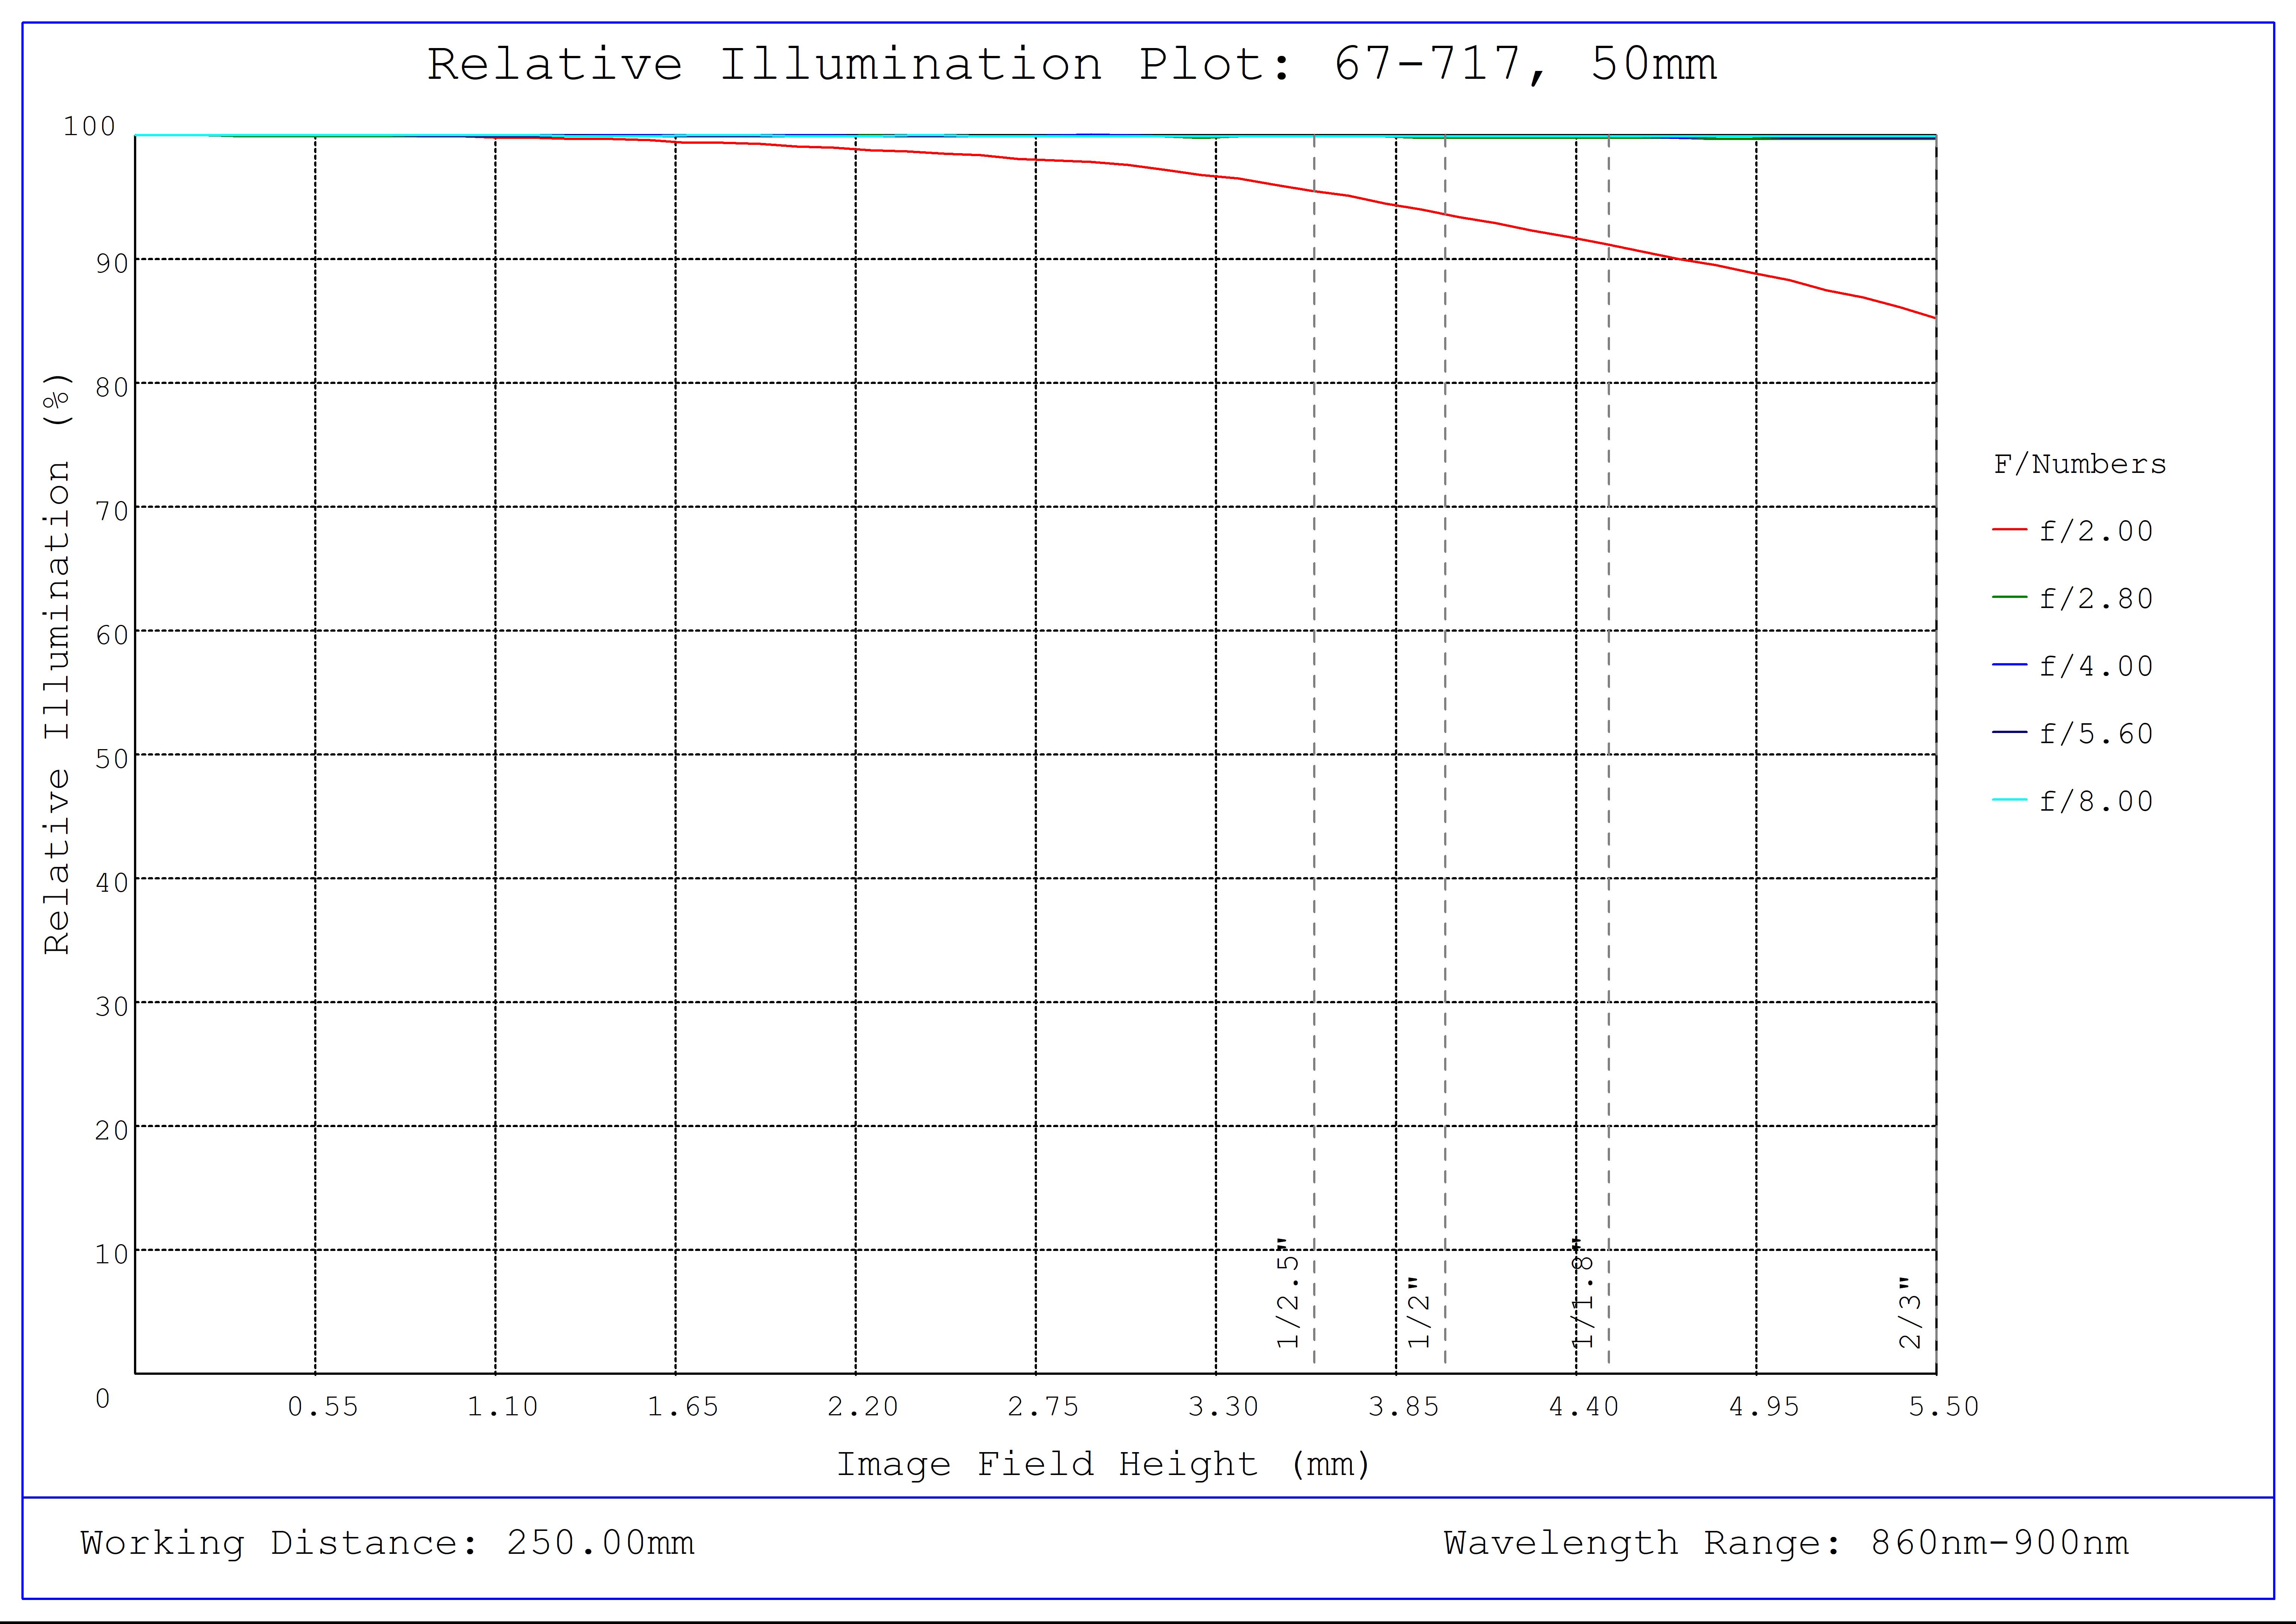 #67-717, 50mm C VIS-NIR Series Fixed Focal Length Lens, Relative Illumination Plot (NIR)